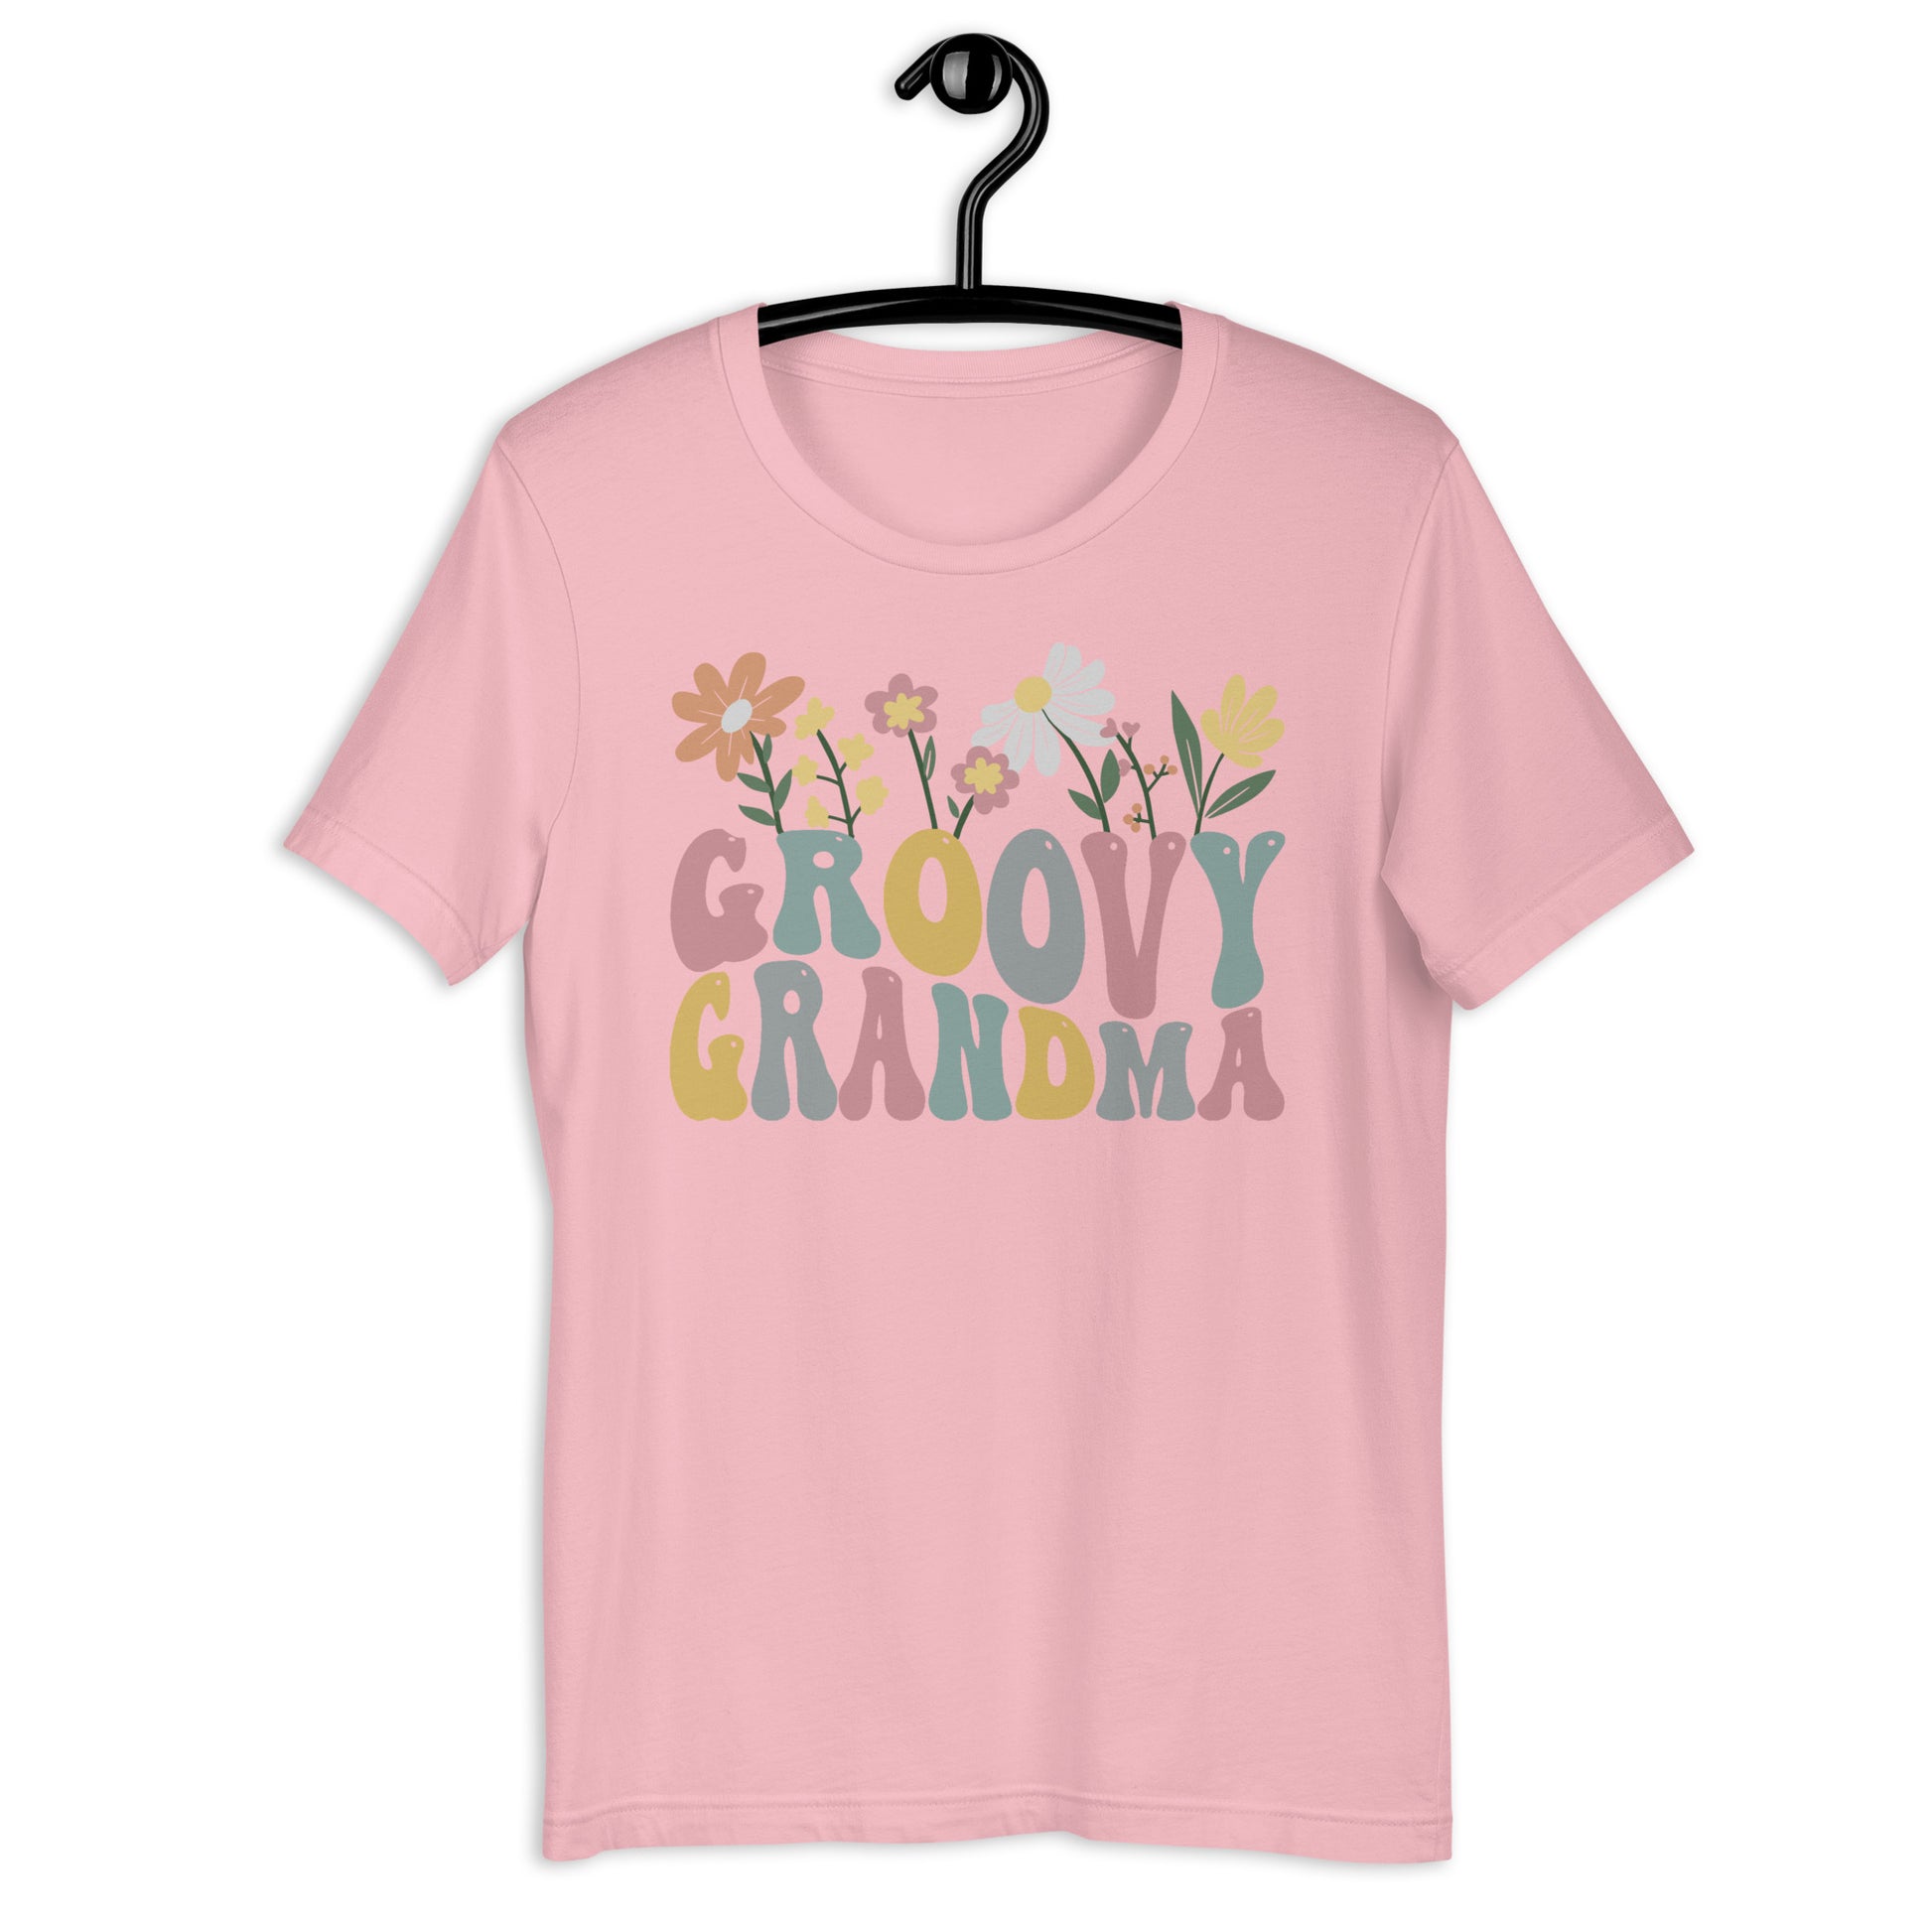 Groovy Grandma T-shirt - Amazing Faith Designs